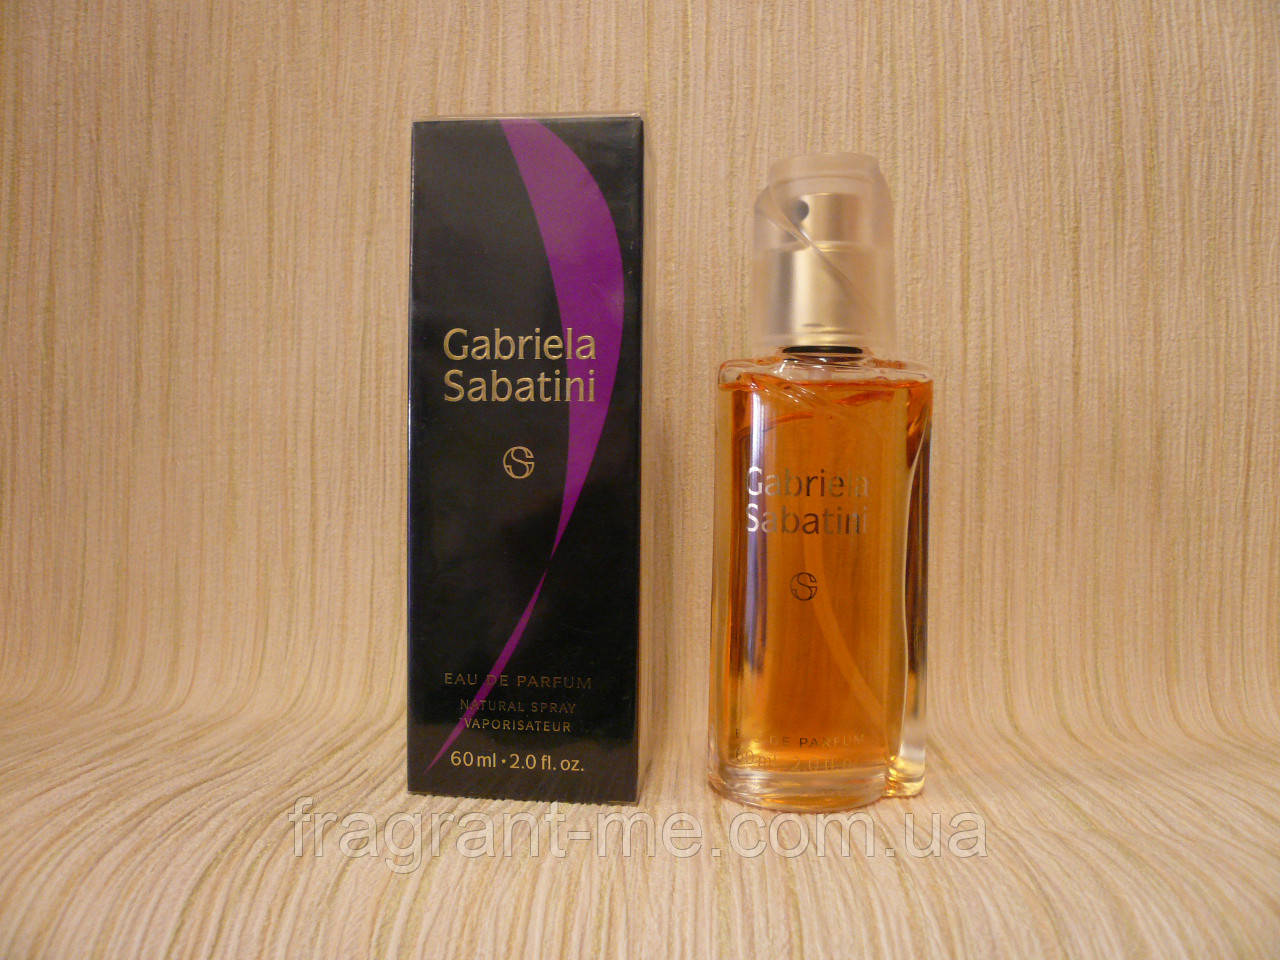 Gabriela Sabatini — Gabriela Sabatini (1989) — Парфумована вода 30 мл — Вінтаж, формула аромату 1989 року